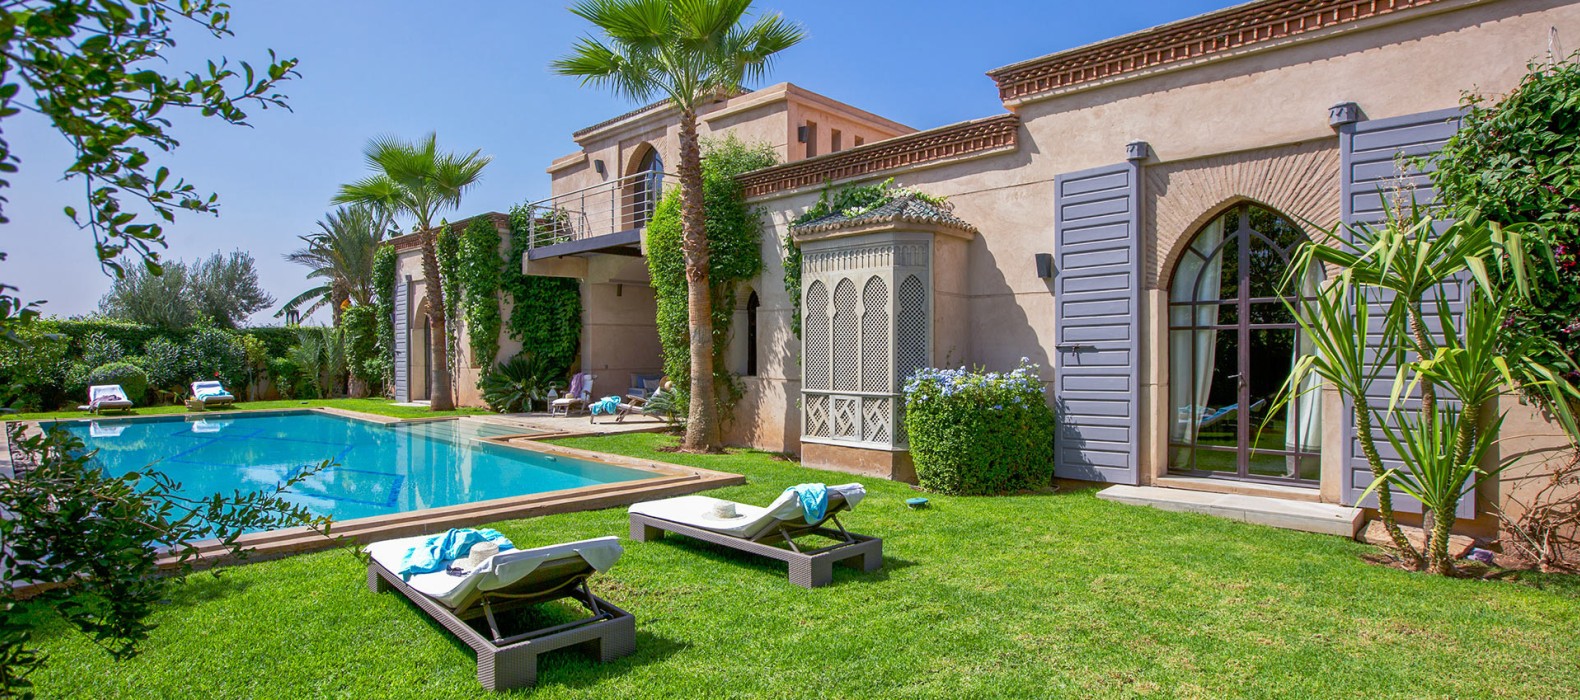 Garden view of Villa Youne in Marrakech